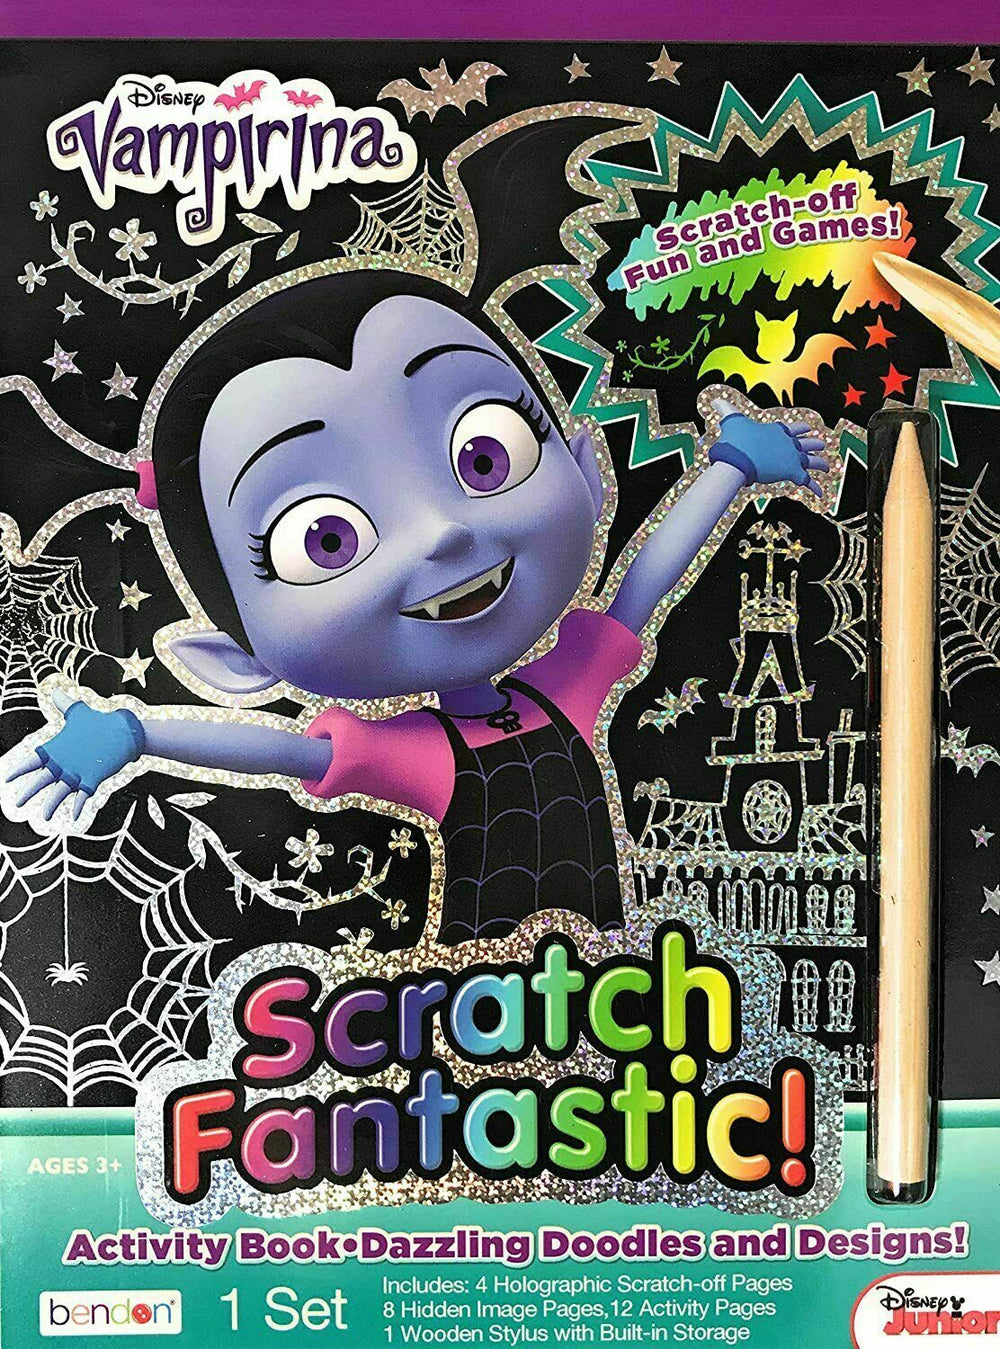 Disney Vampirina Scratch Fantastic Activity Book 12 Scratch Off Activity Pages!